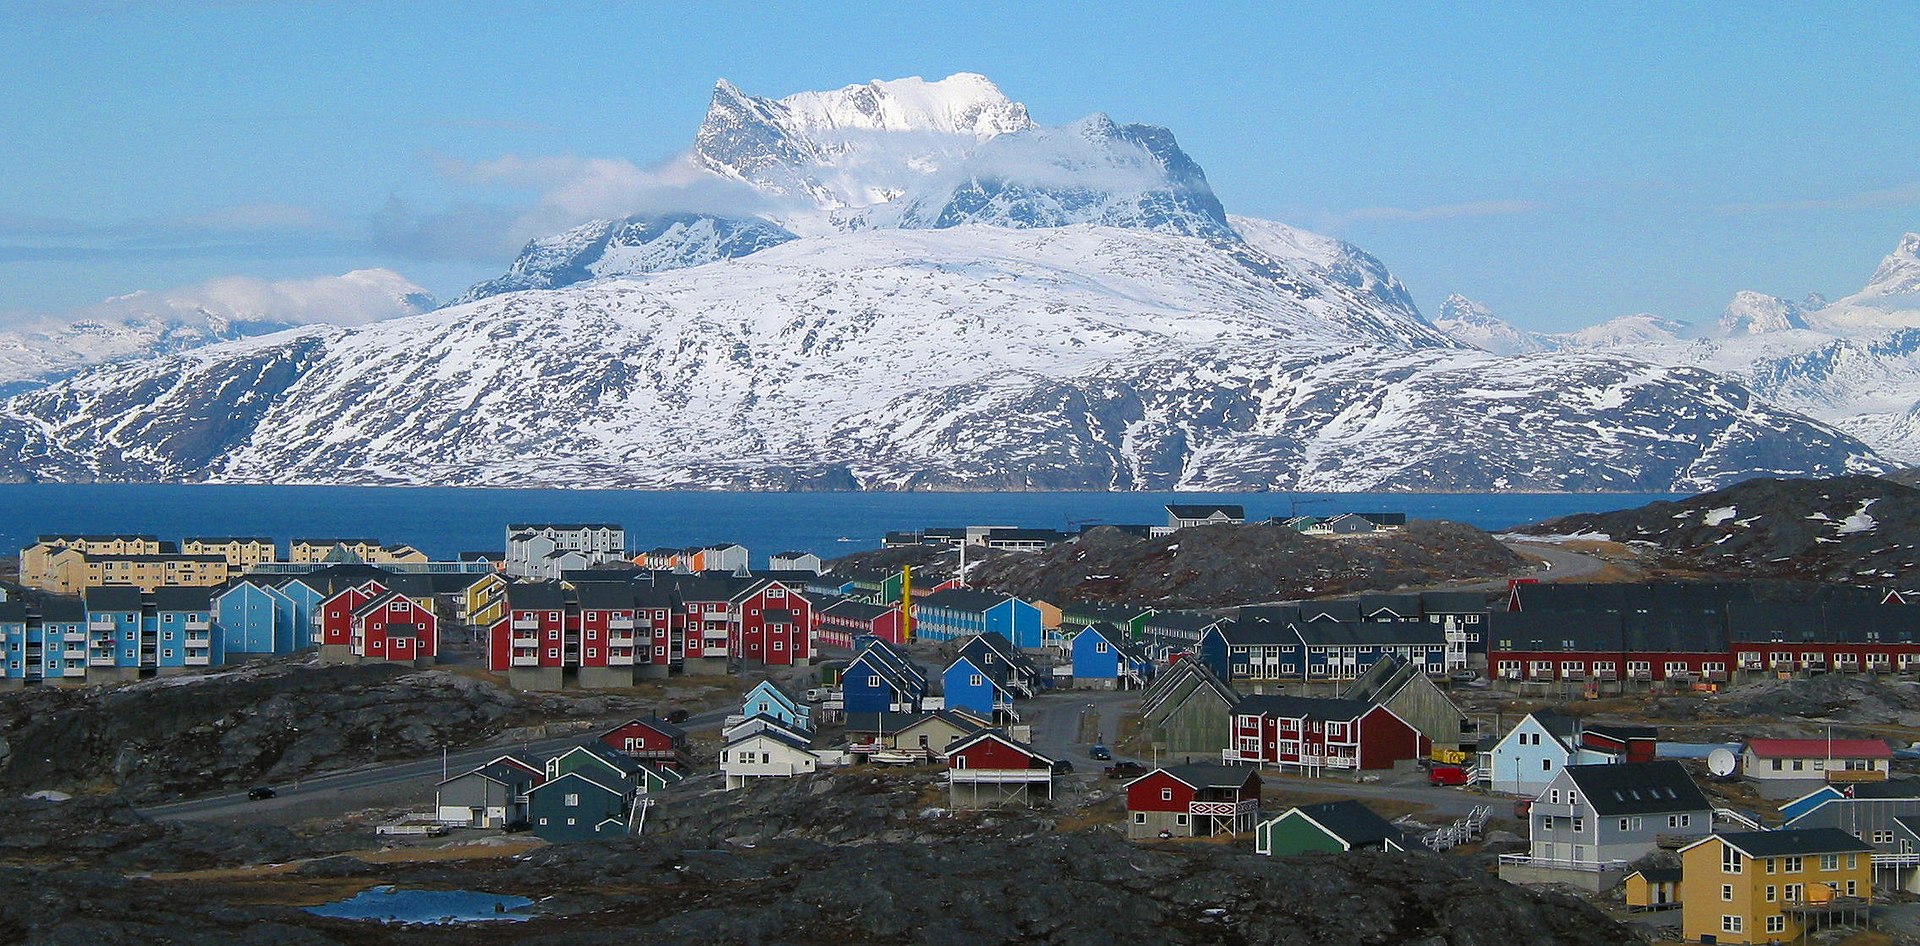 Нуук, столица Гренландии. Фото Wikipedia.org.